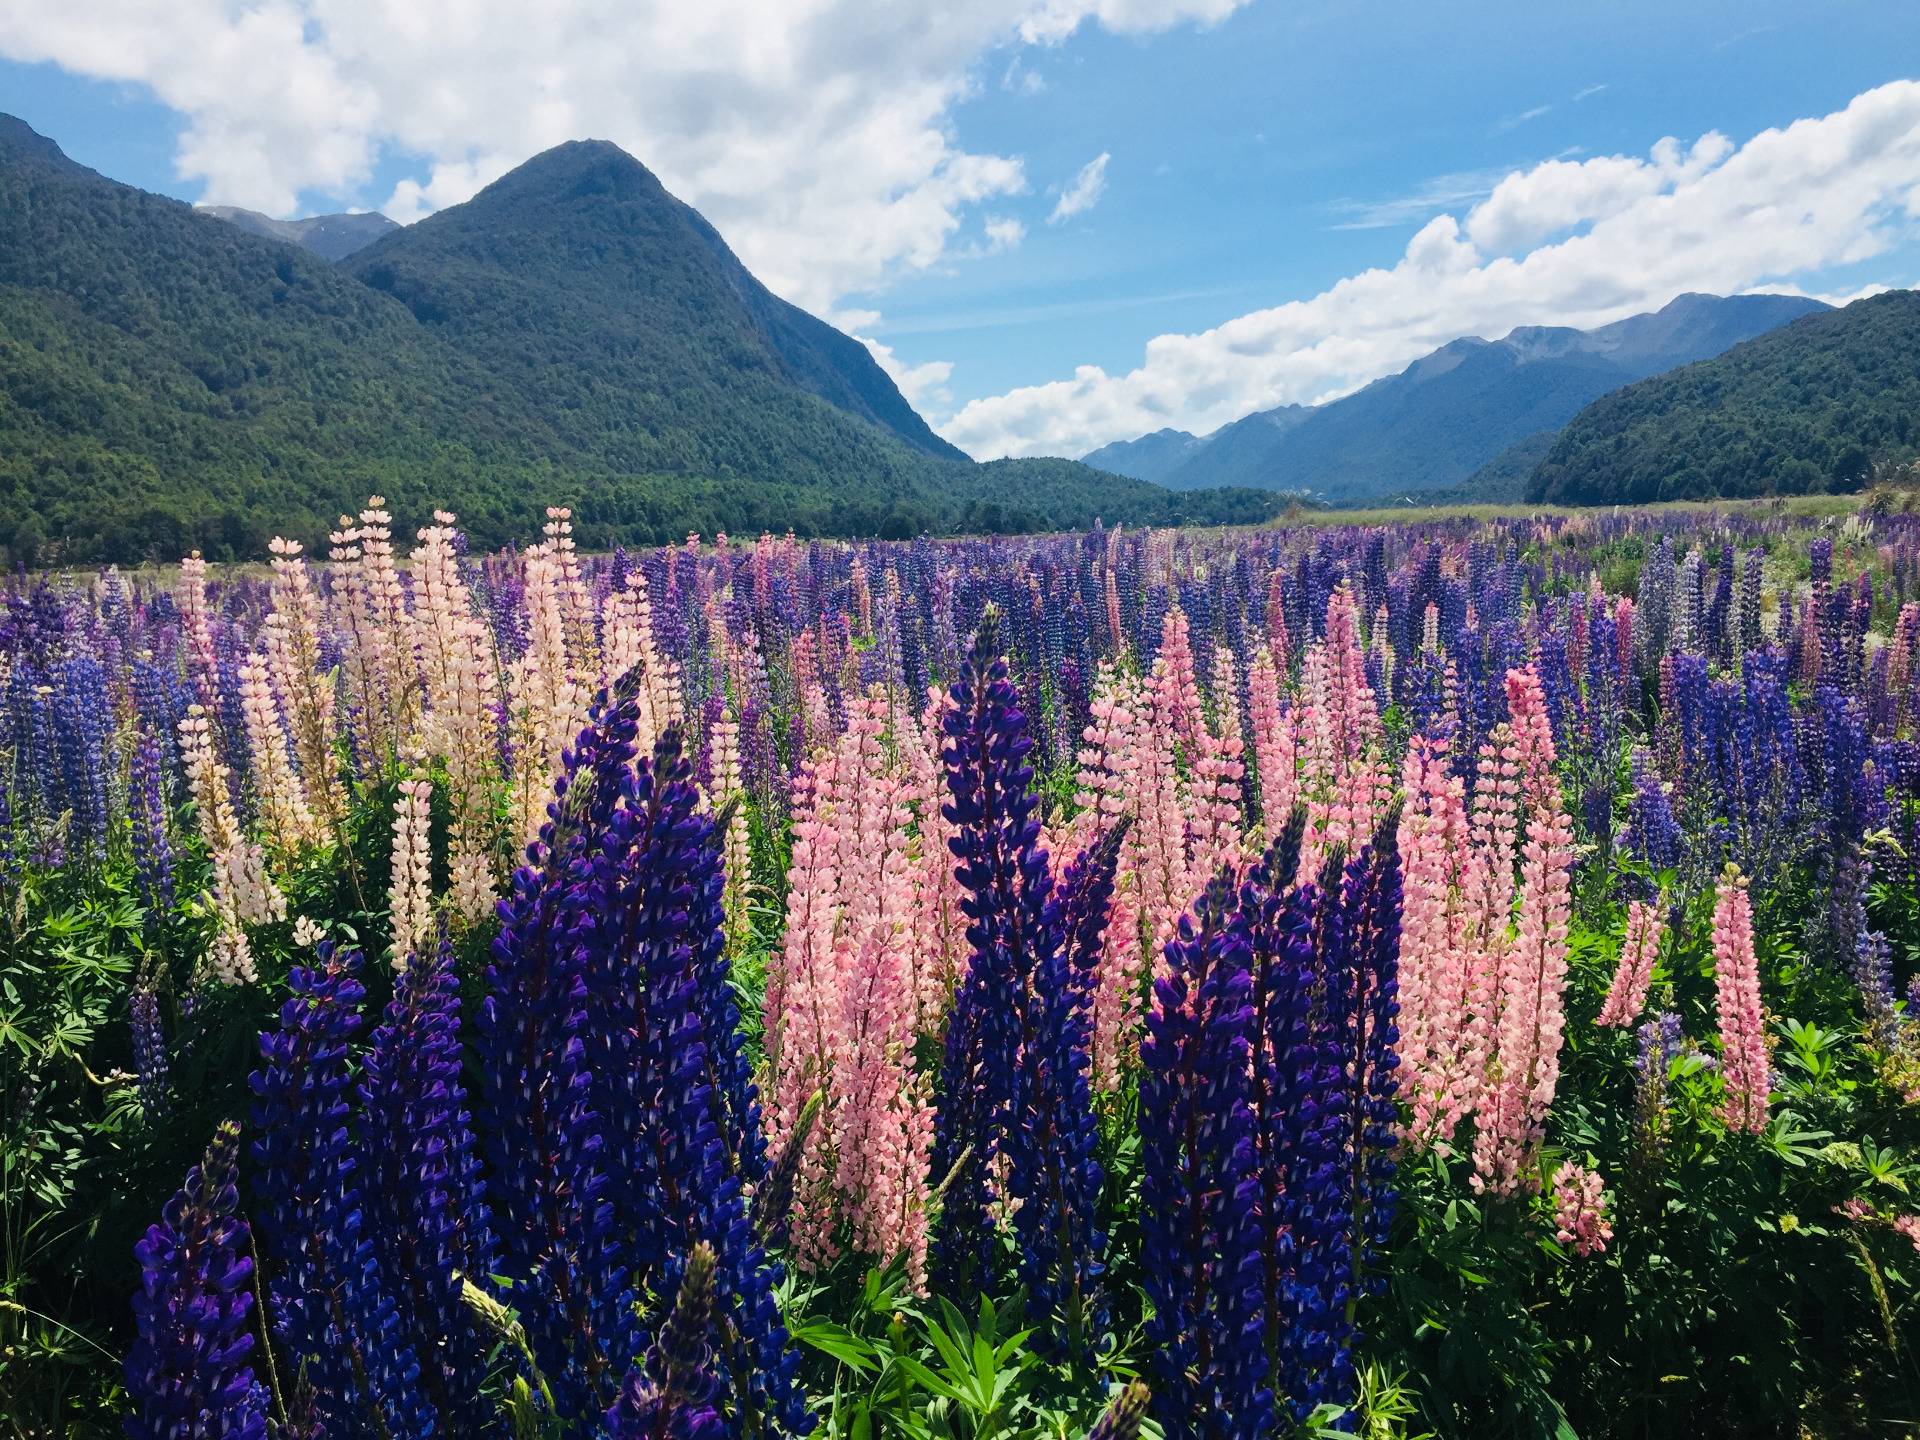 Enjoying the purple Lupin Flora at Lake Tekapo in New Zealand